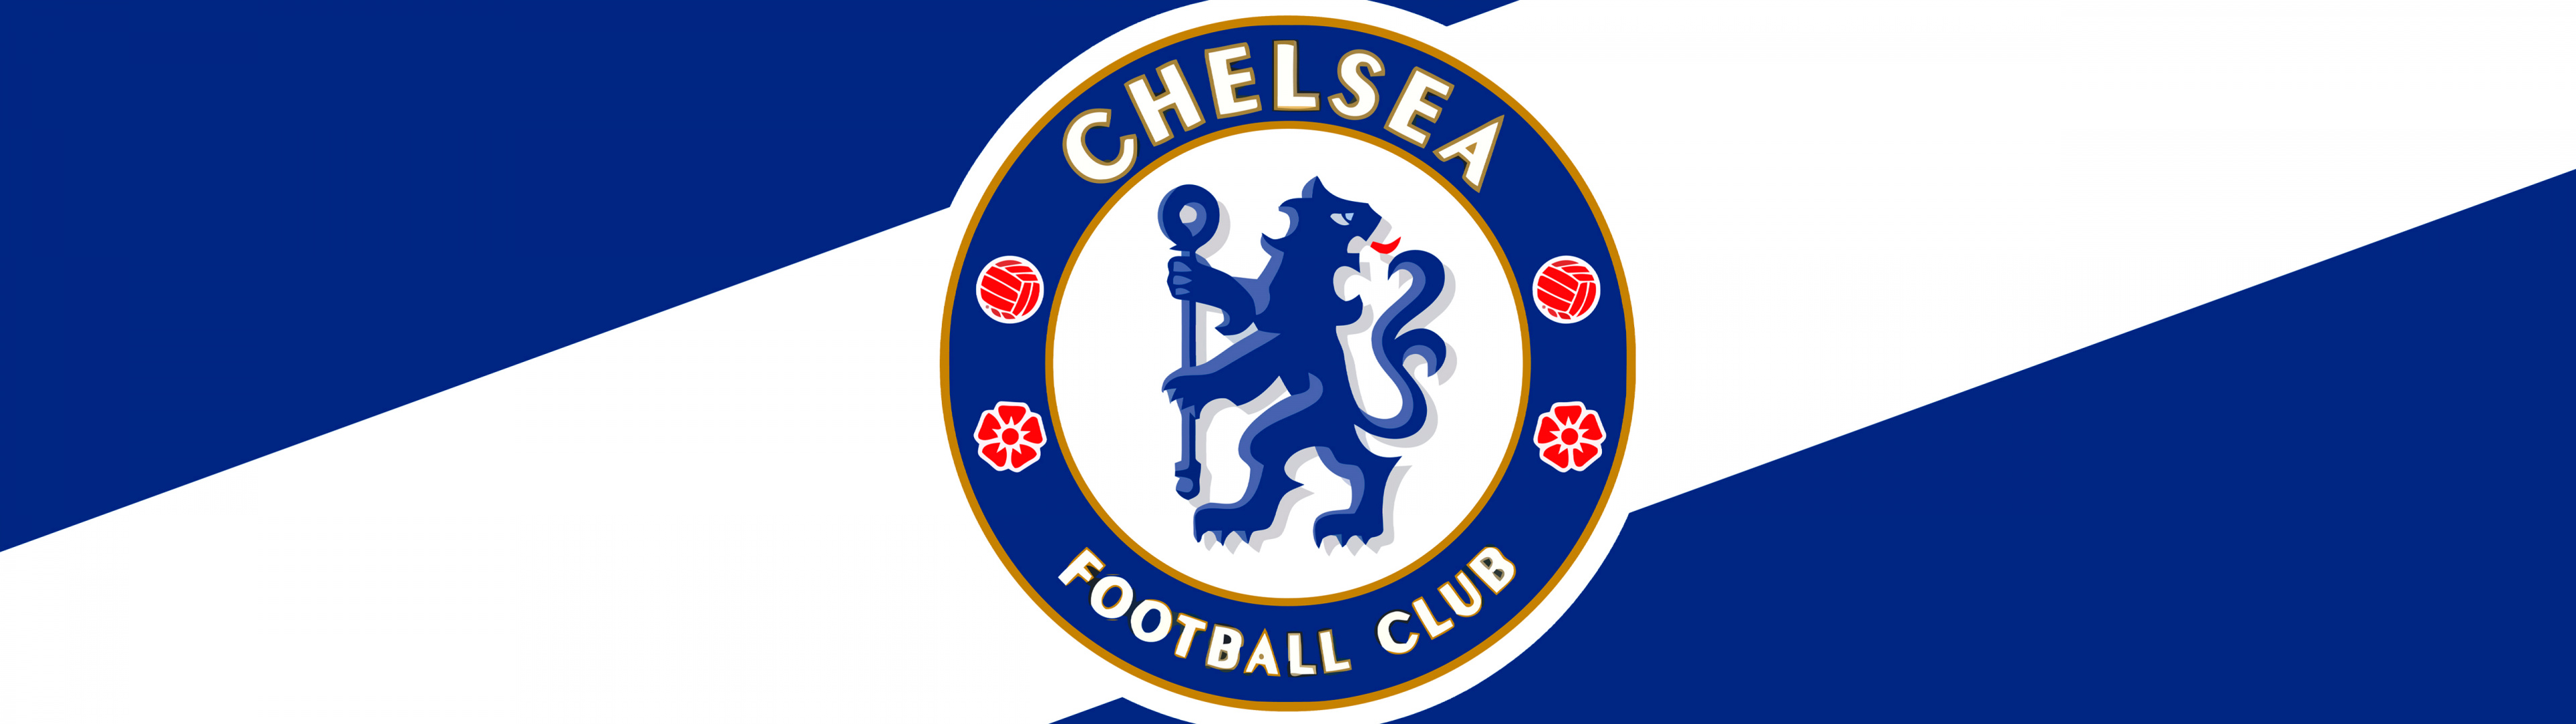 Chelsea logo, Sports team, Chelsea FC wallpaper, Football club, 3840x1080 Dual Screen Desktop